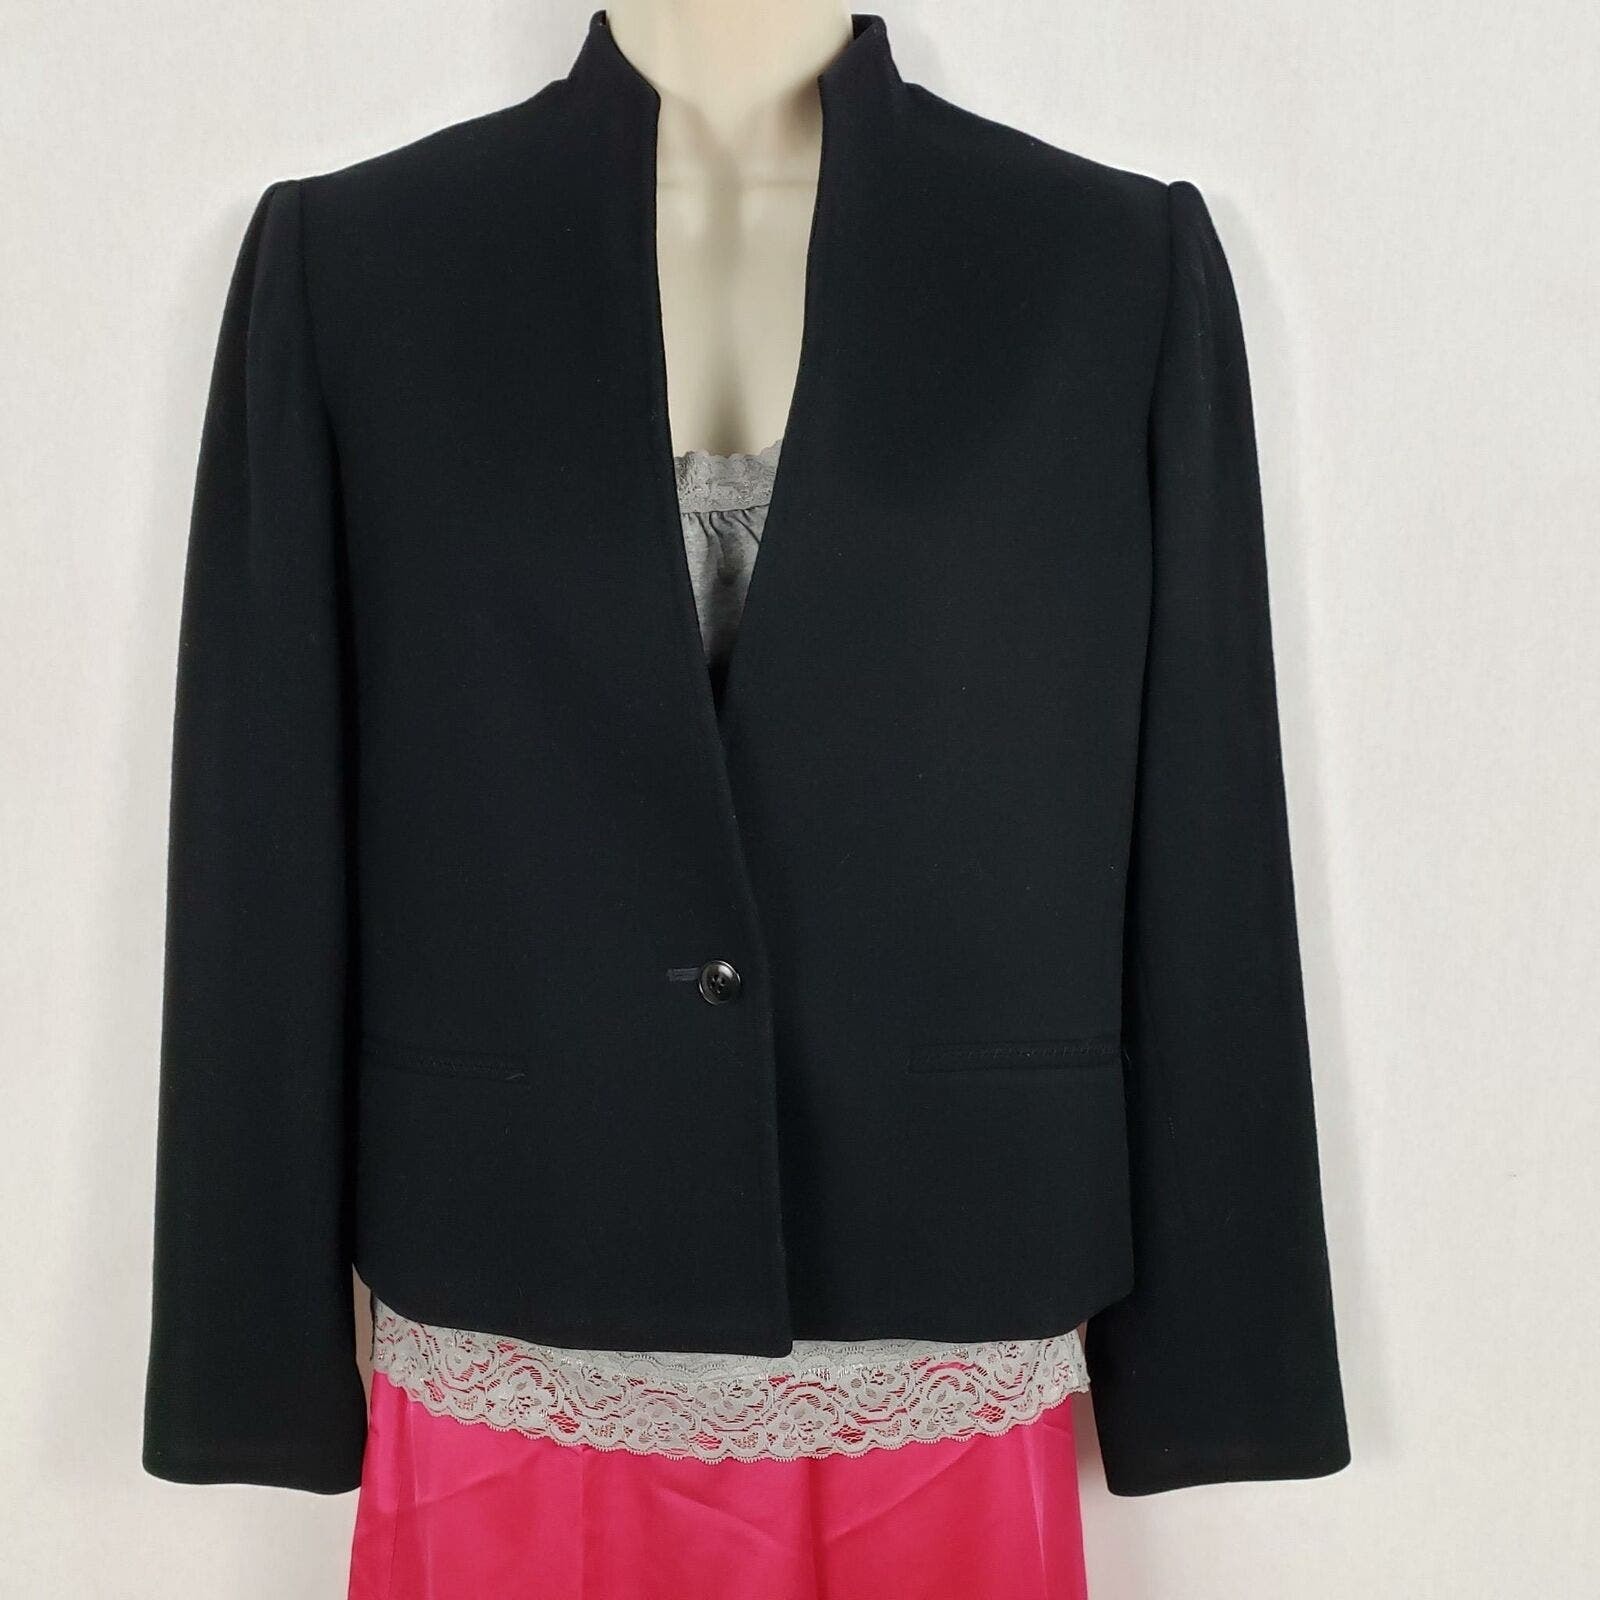 Primary image for Vtg Suits Galore Jim Baldwin Wool Blazer Women's Size 6 Black One Single Button